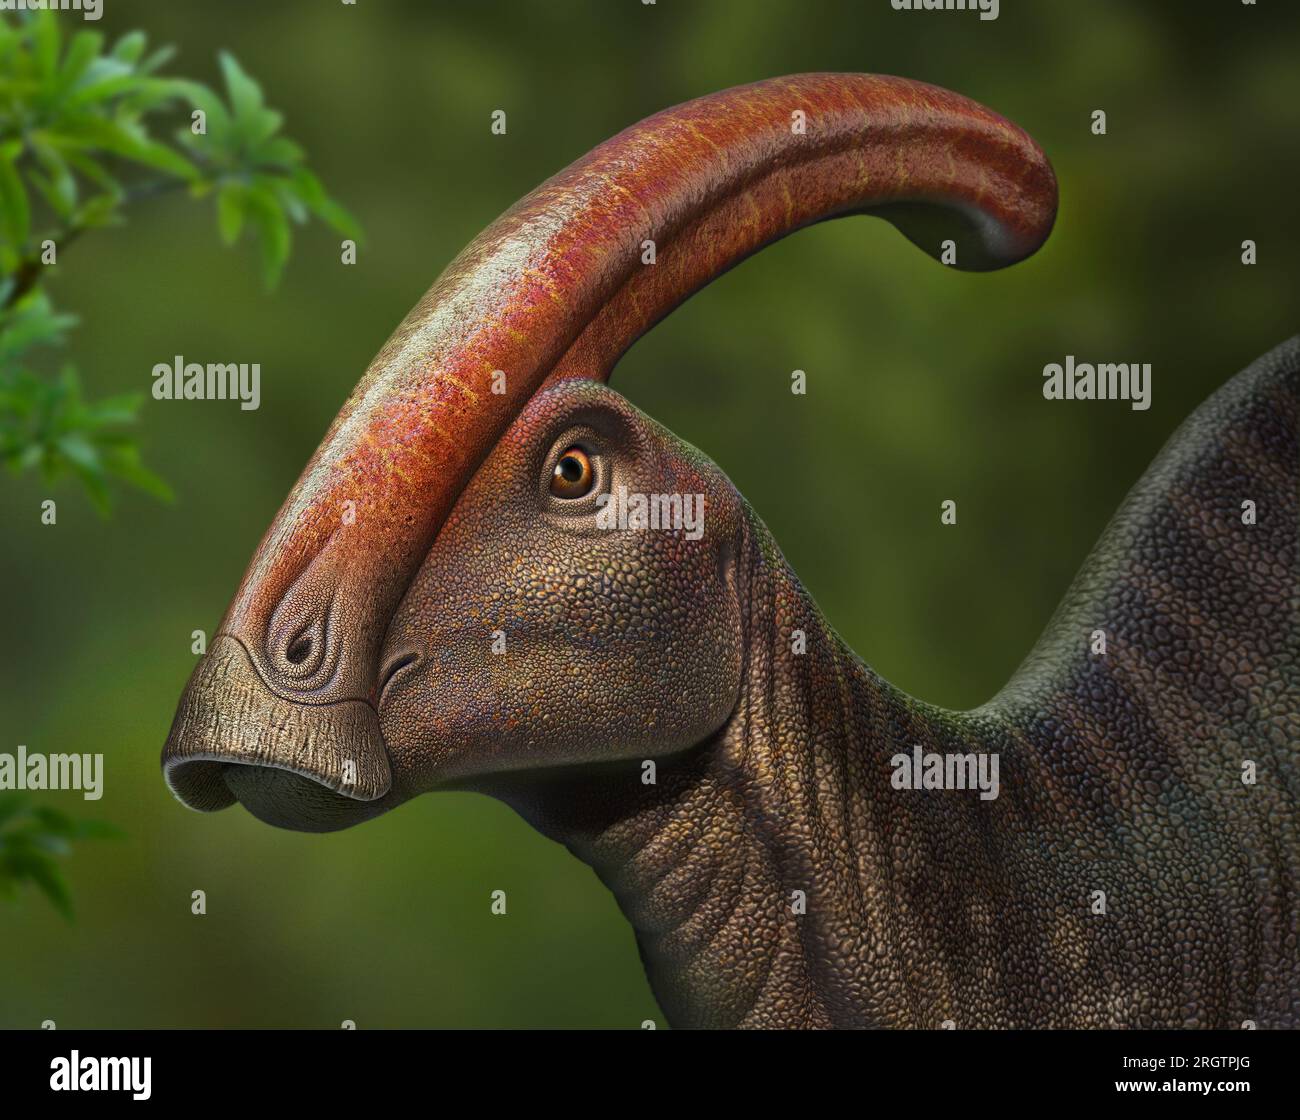 Parasaurolophus Stock Photo